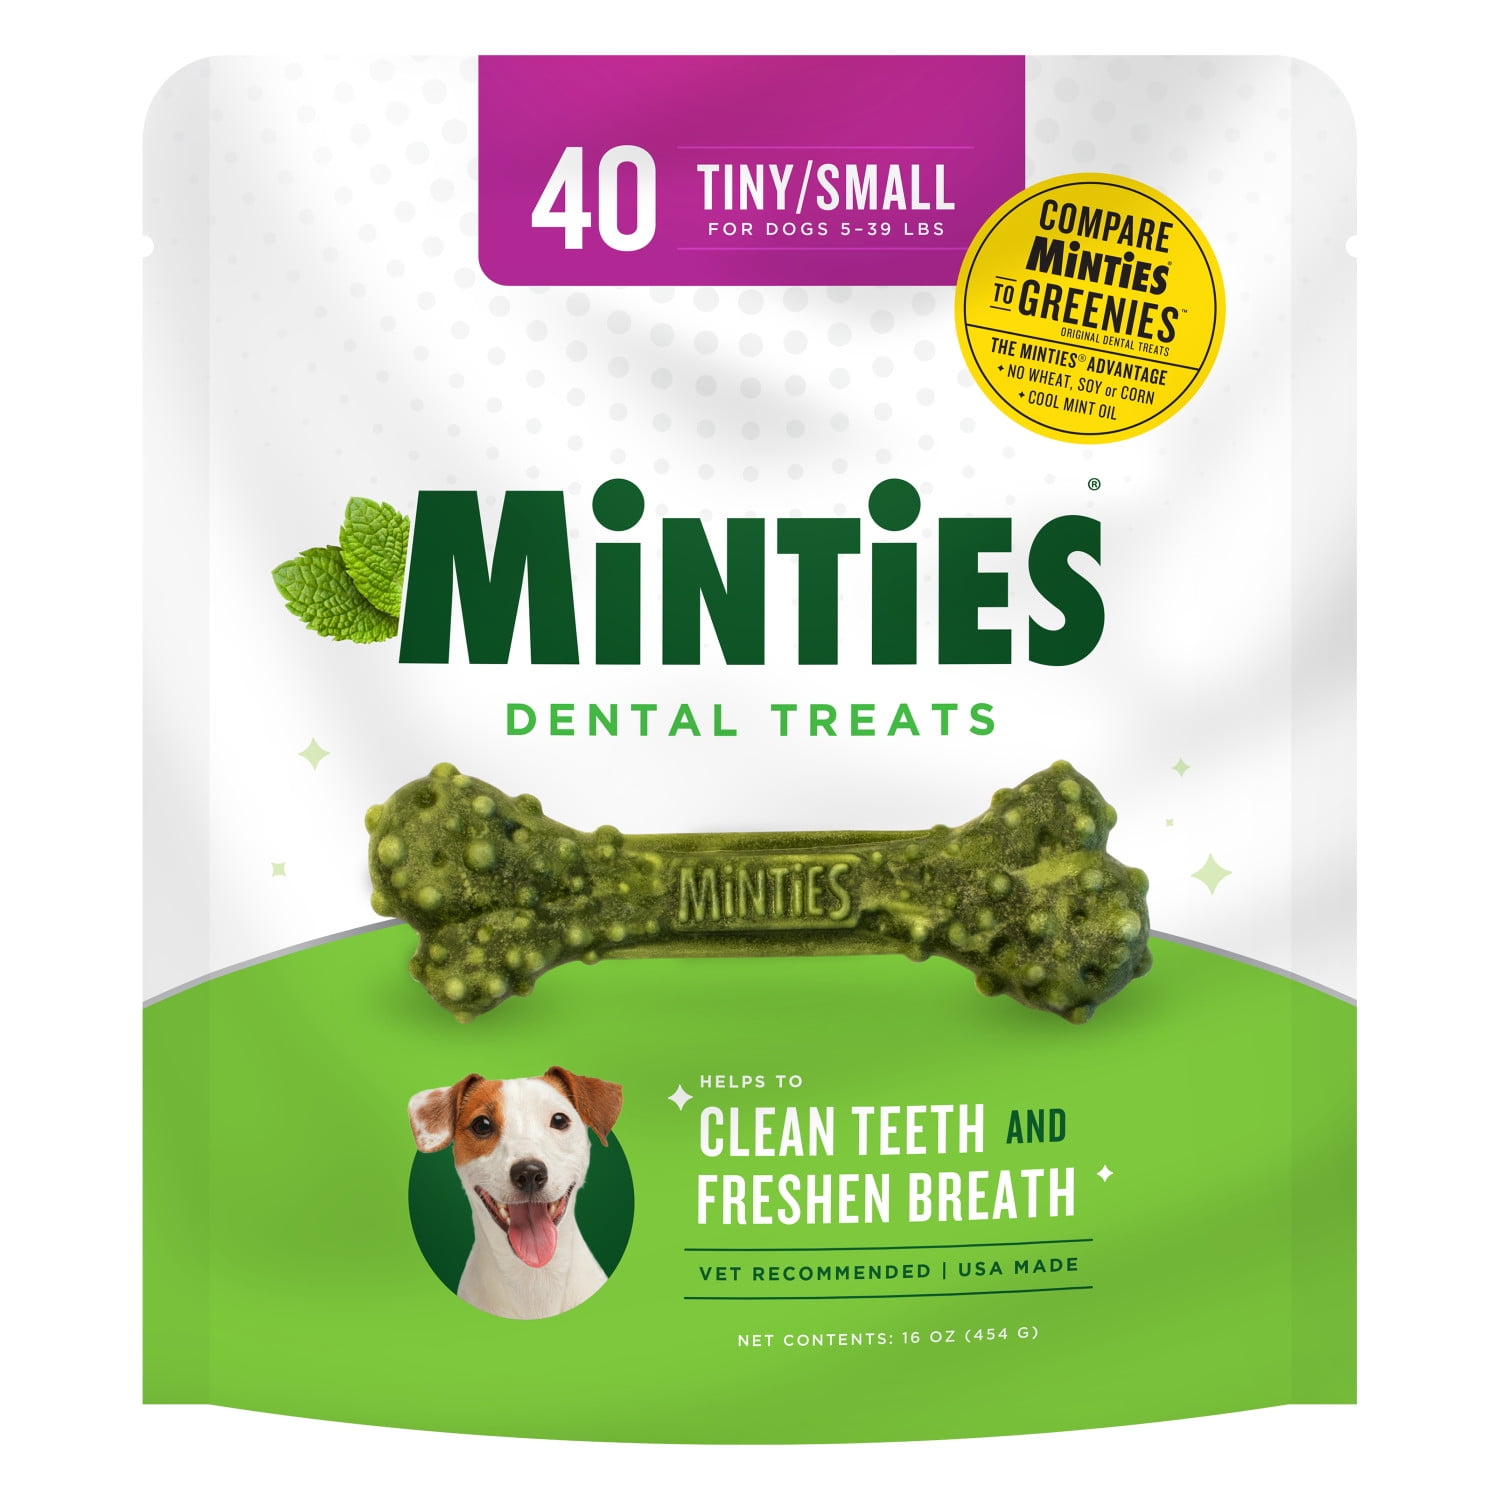 MINTIES Dog Dental Bone Treats, Dental Chews for Tiny/Small Dogs 5-39 lbs, 40 Count